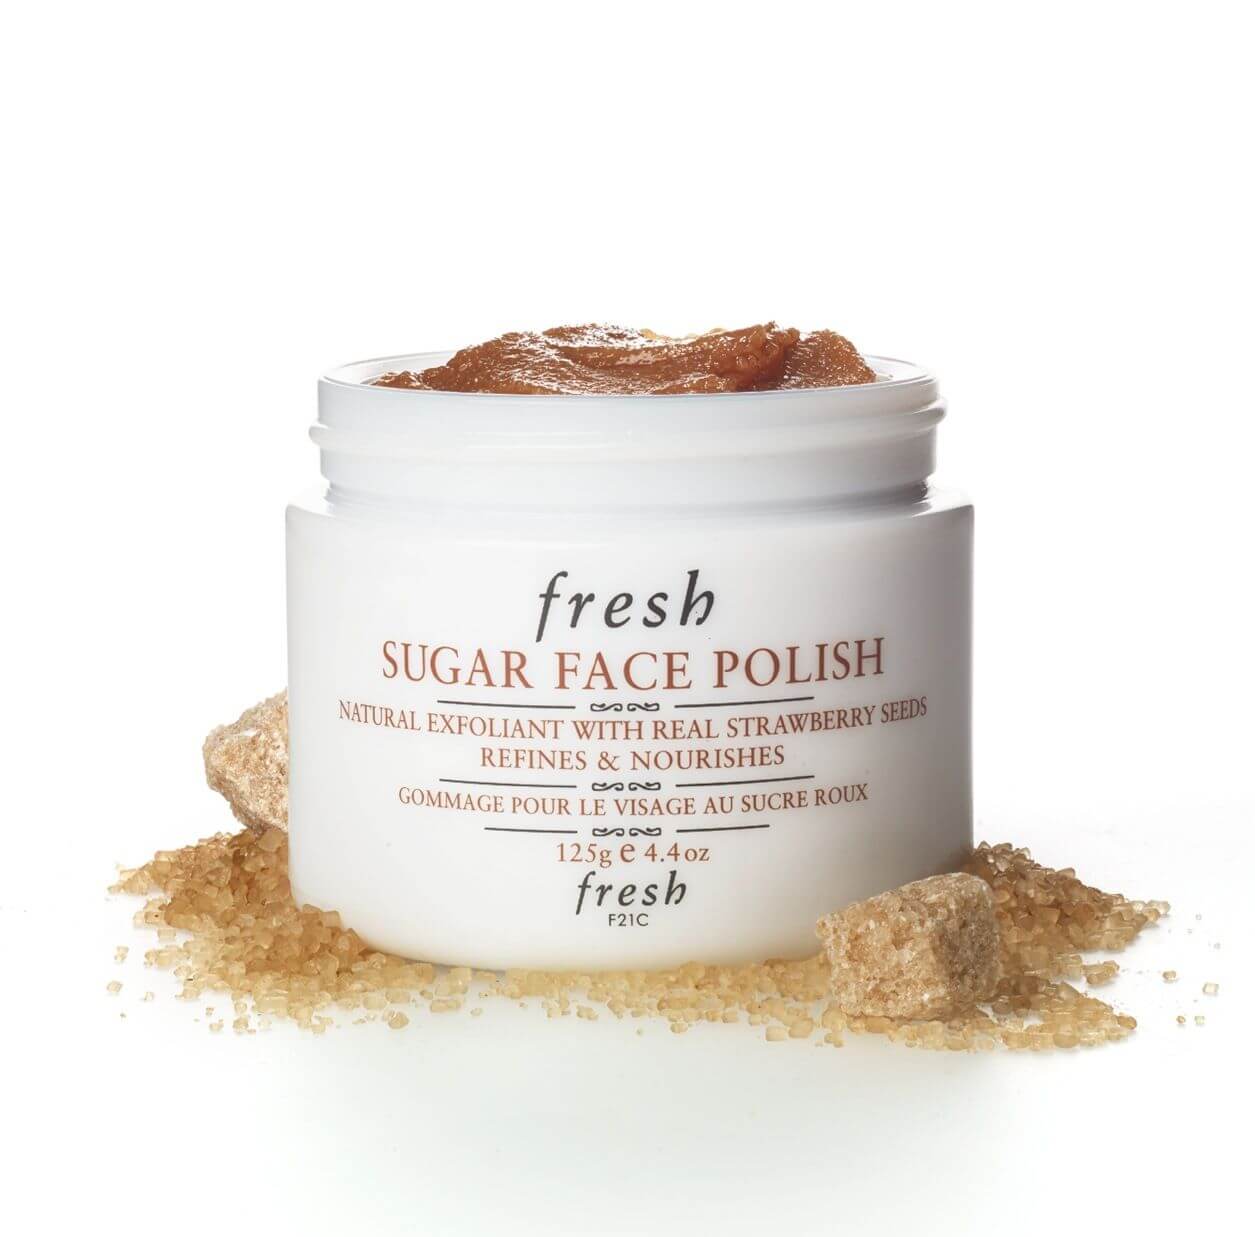 Fresh Sugar Face Polish 30 g. ผลิตภัณฑ์ขัดผิวหน้าที่อุดมไปด้วยสารบำรุงผิว ใช้น้ำตาลจากธรรมชาติและเมล็ดสตอเบอร์รี่ทำหน้าที่เป็นตัวขัดเซลล์ผิว ด้วยสูตรที่ถูกพัฒนาให้ล้ำหน้า   ตัวผลิตภัณฑ์จึงอ่อนโยนมาก สามารถใช้ได้กับทุกสภาพผิว ช่วยขัดเซลล์ผิว ช่วยทำให้ผิวชุ่มชื้น เรียบเนียน และผิวเปล่งประกายกระจ่างใสยิ่งกว่าเดิม